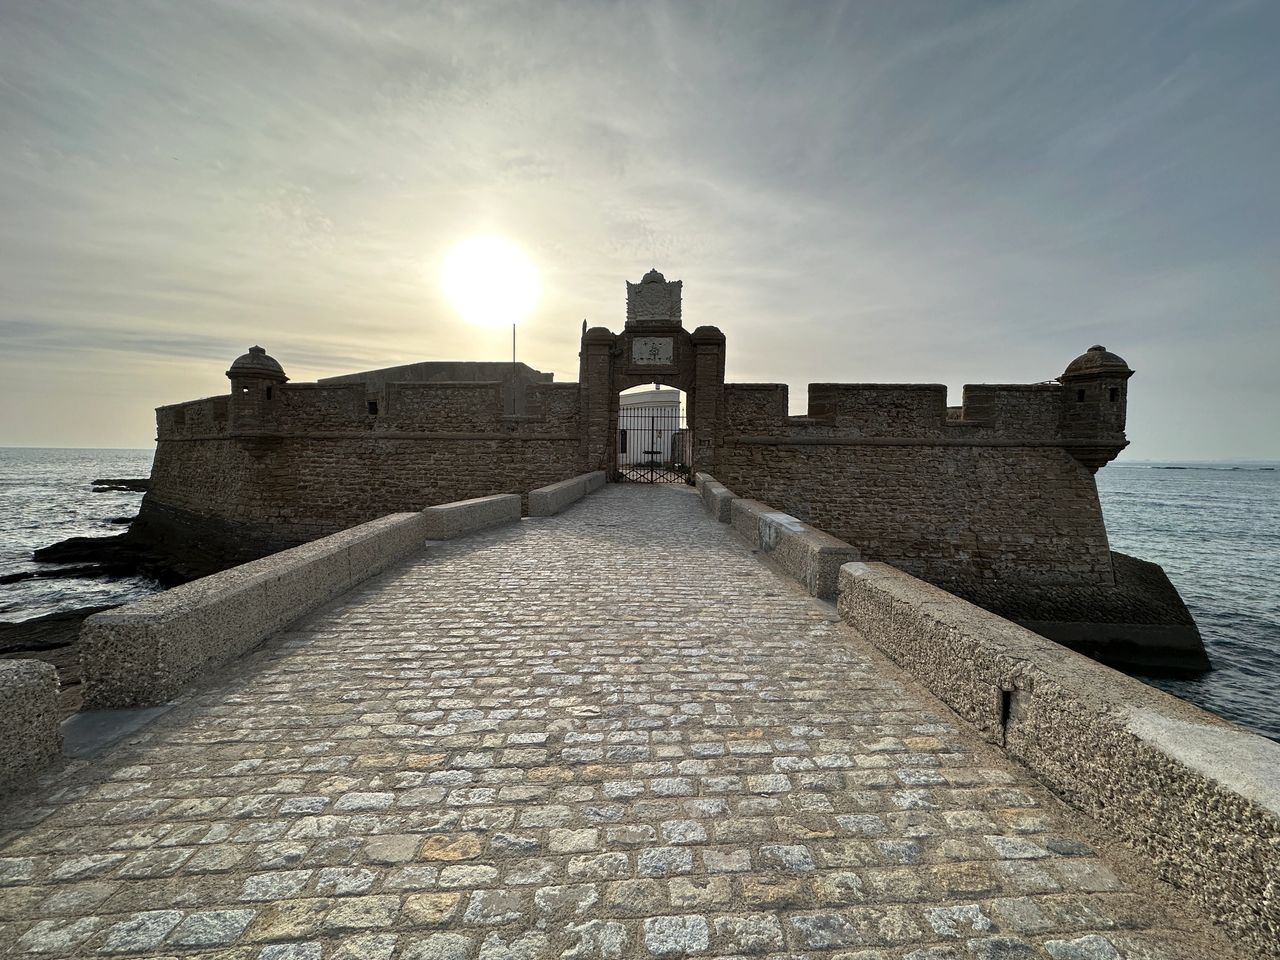 Castillo de San Sebastian sits at the end of a long walkway from the beach